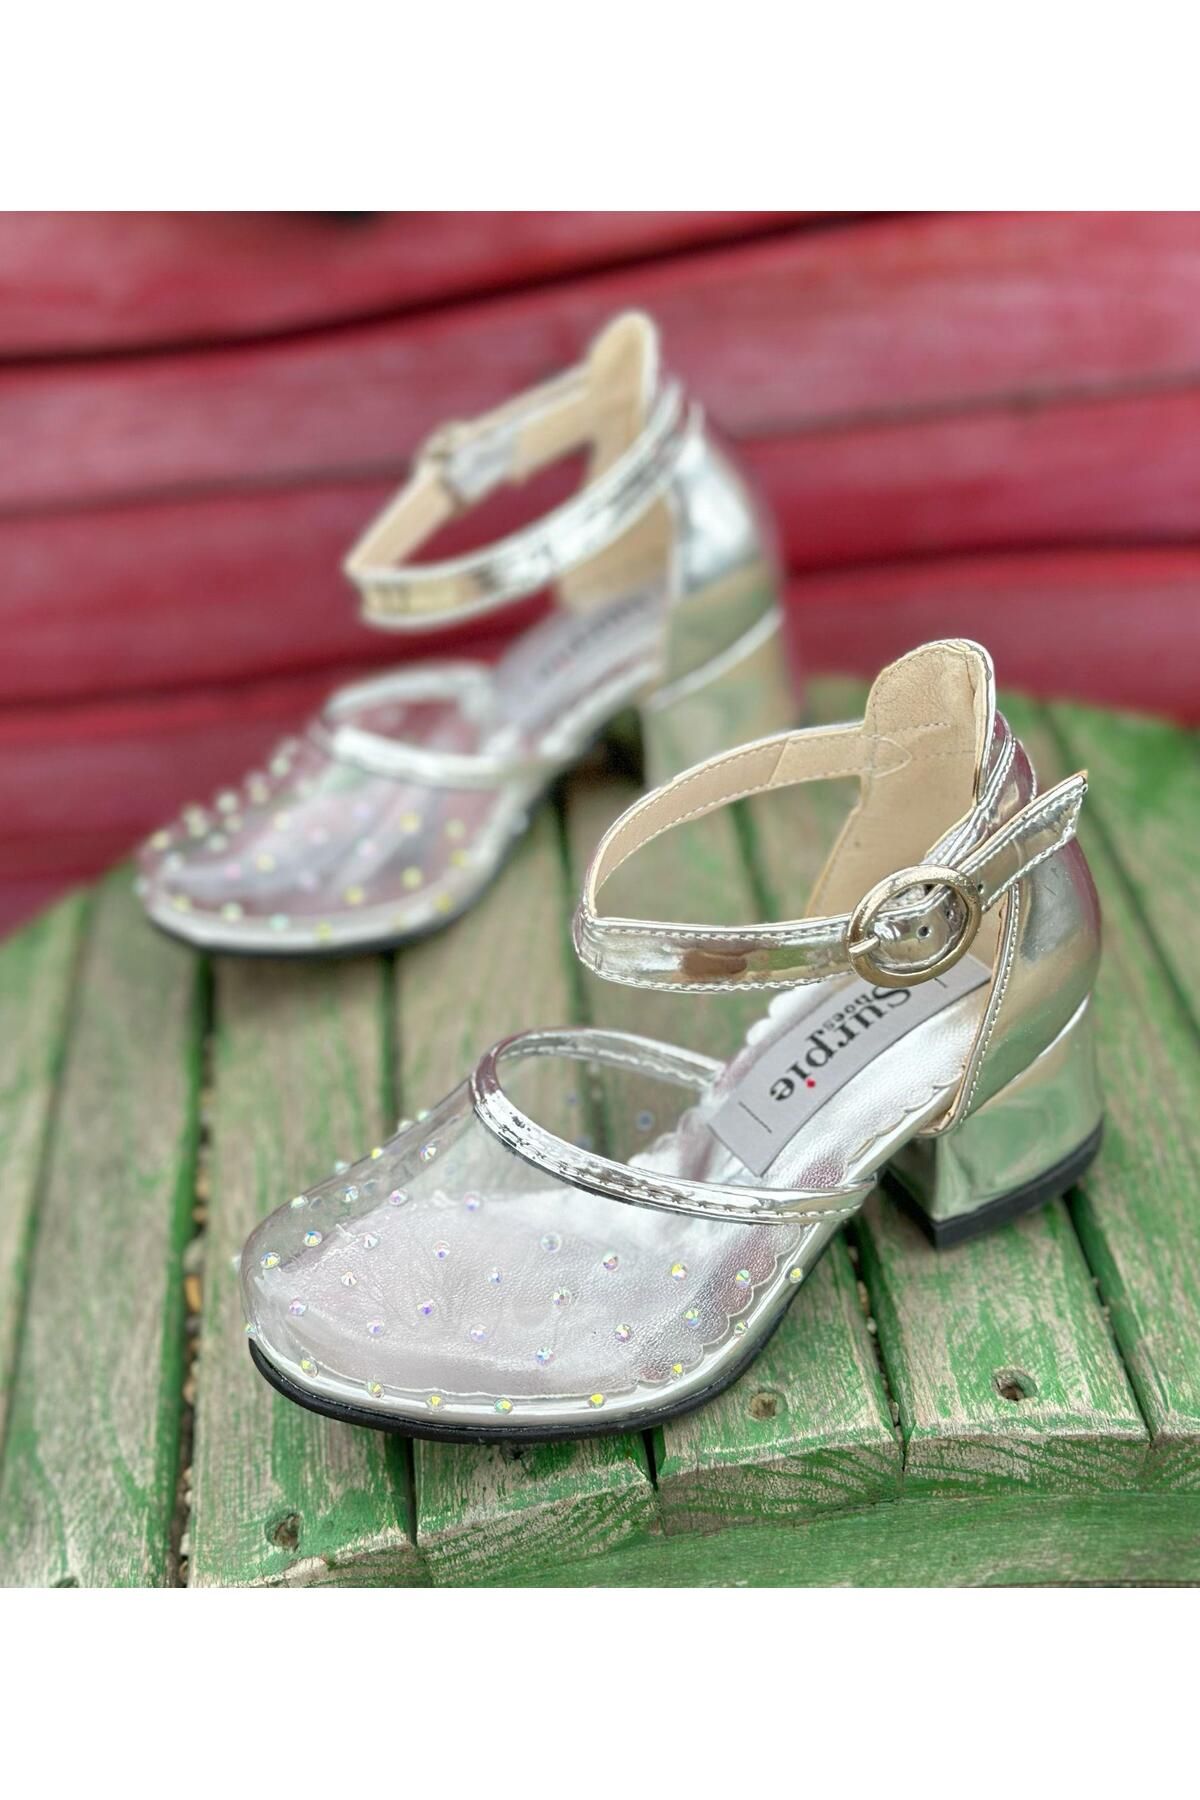 Surpie Shoes Çocuk Topuklu Ayakkabı, Kız Çocuk Ayakkabı, Sinderella Ayakkabı